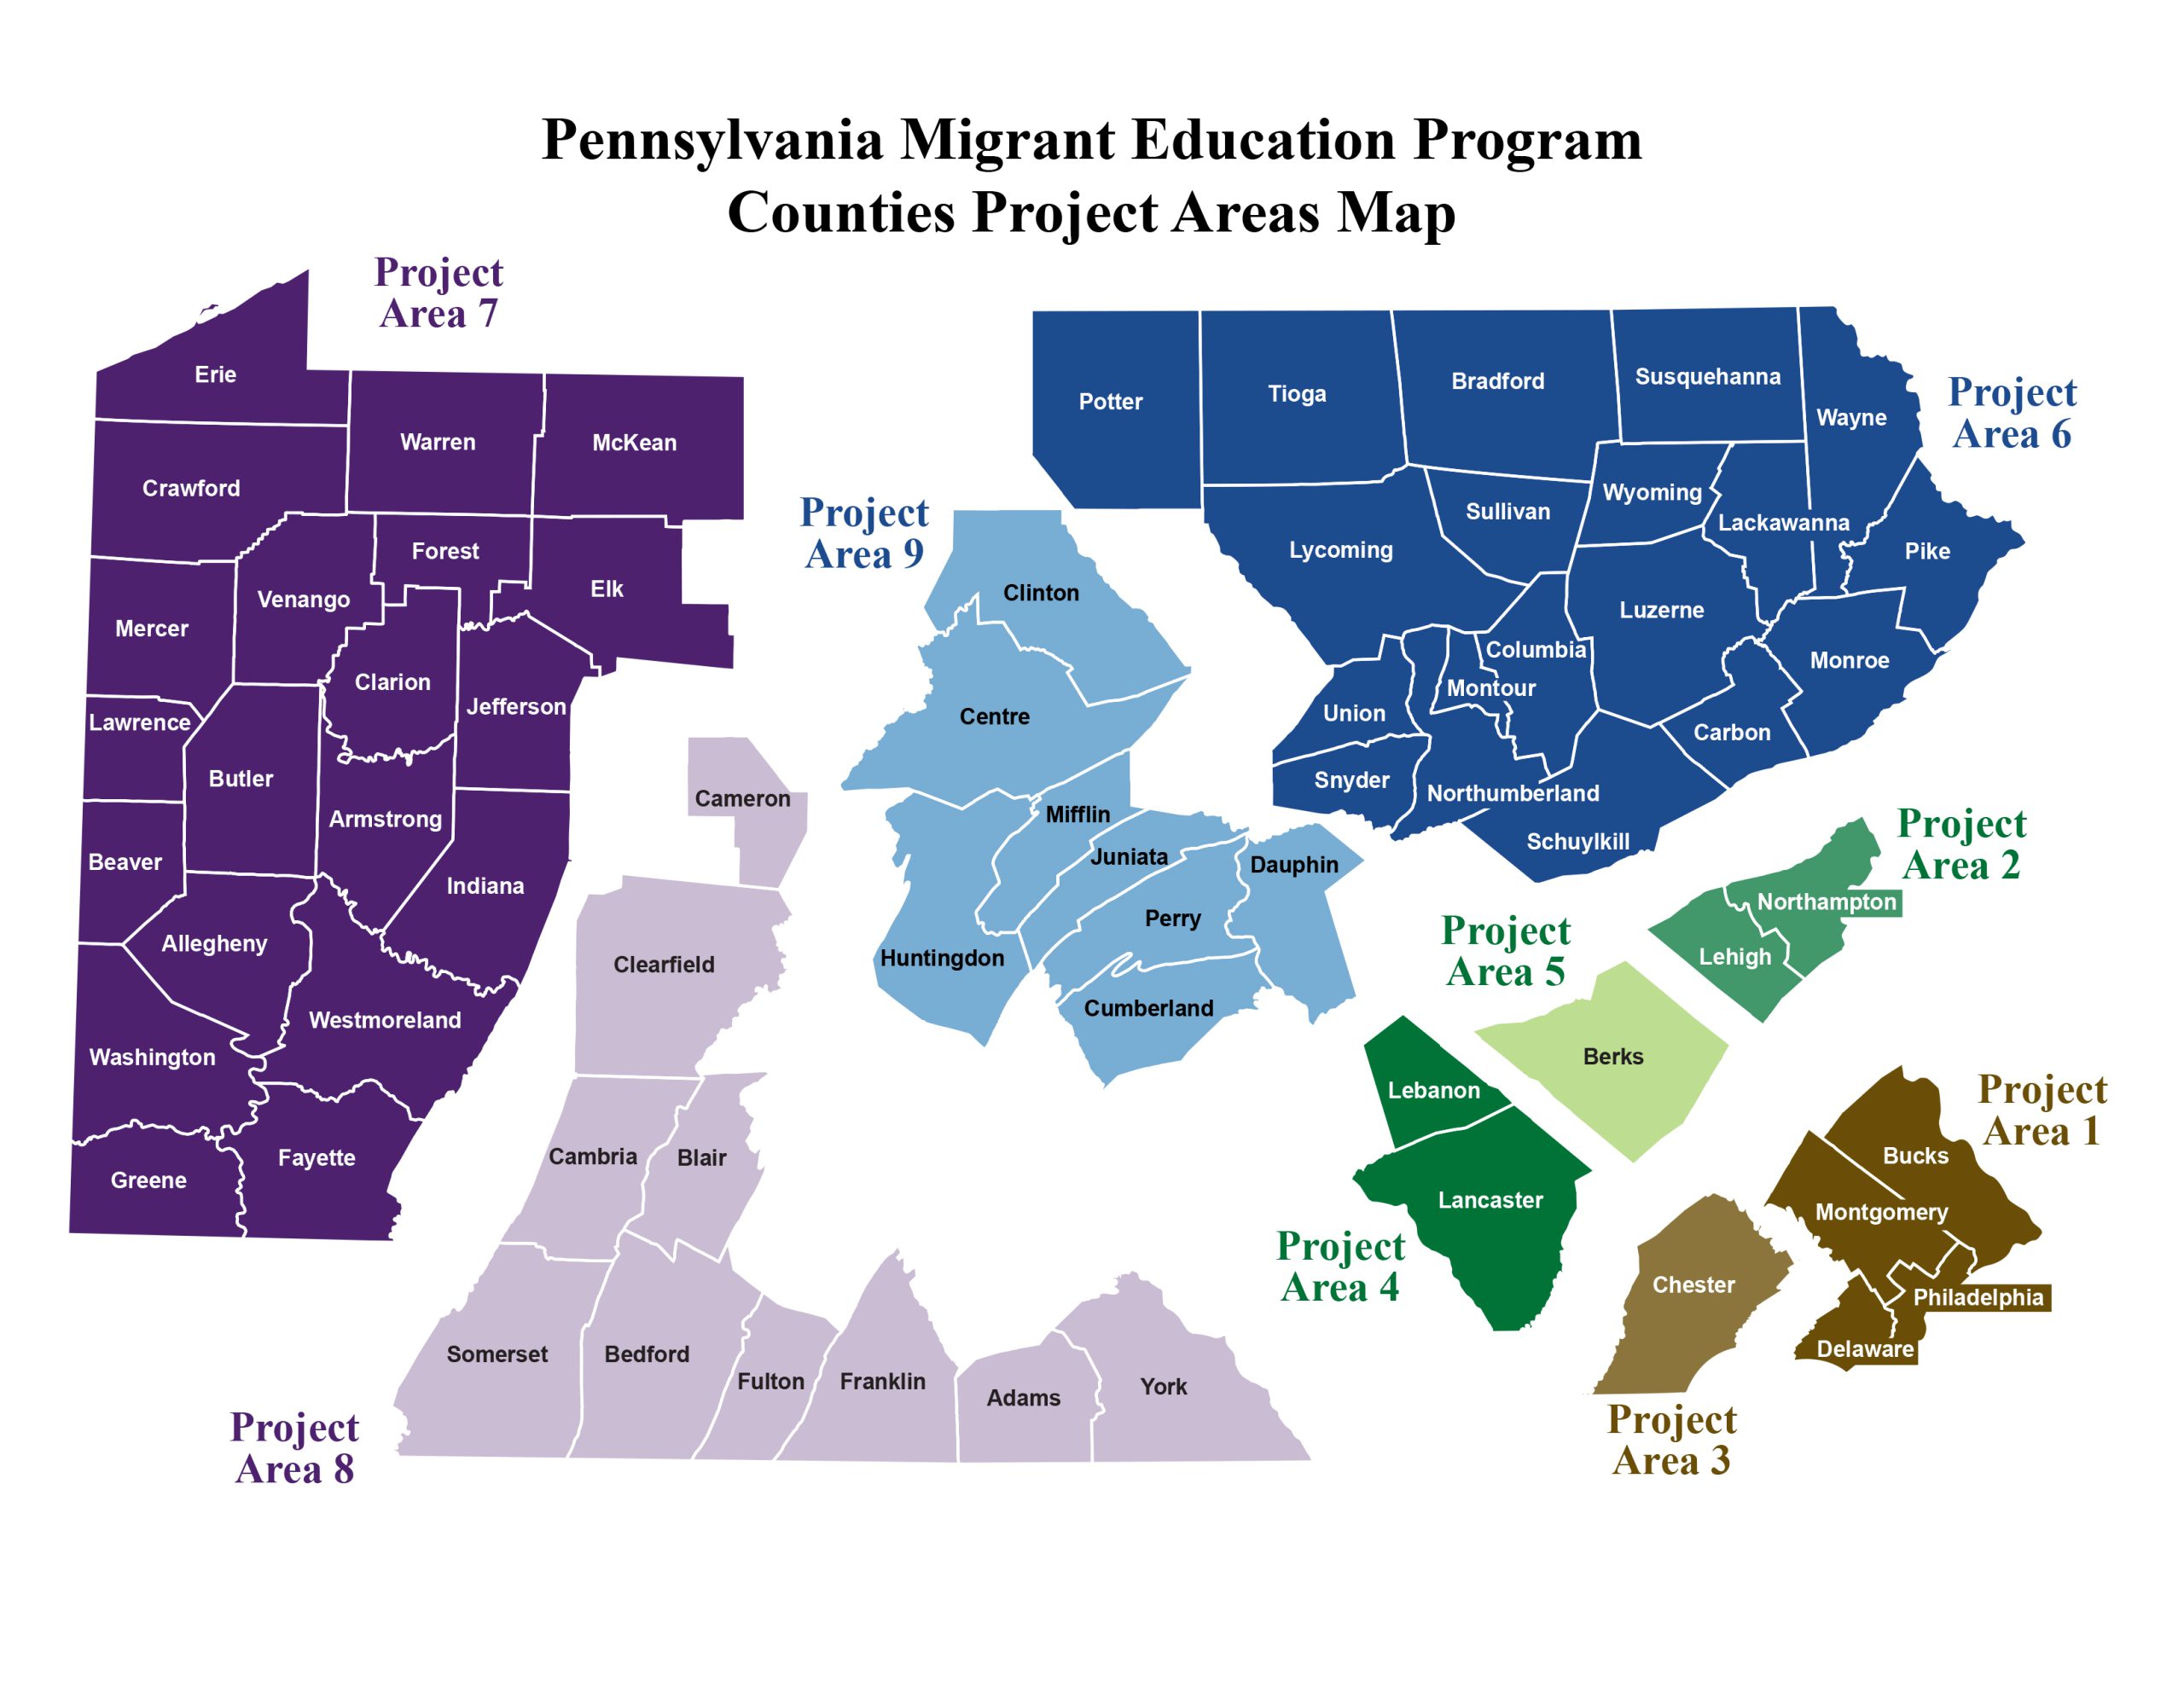 visual reprensentation of Pennsylvania Migrant Education Program Counties Project Areas Map